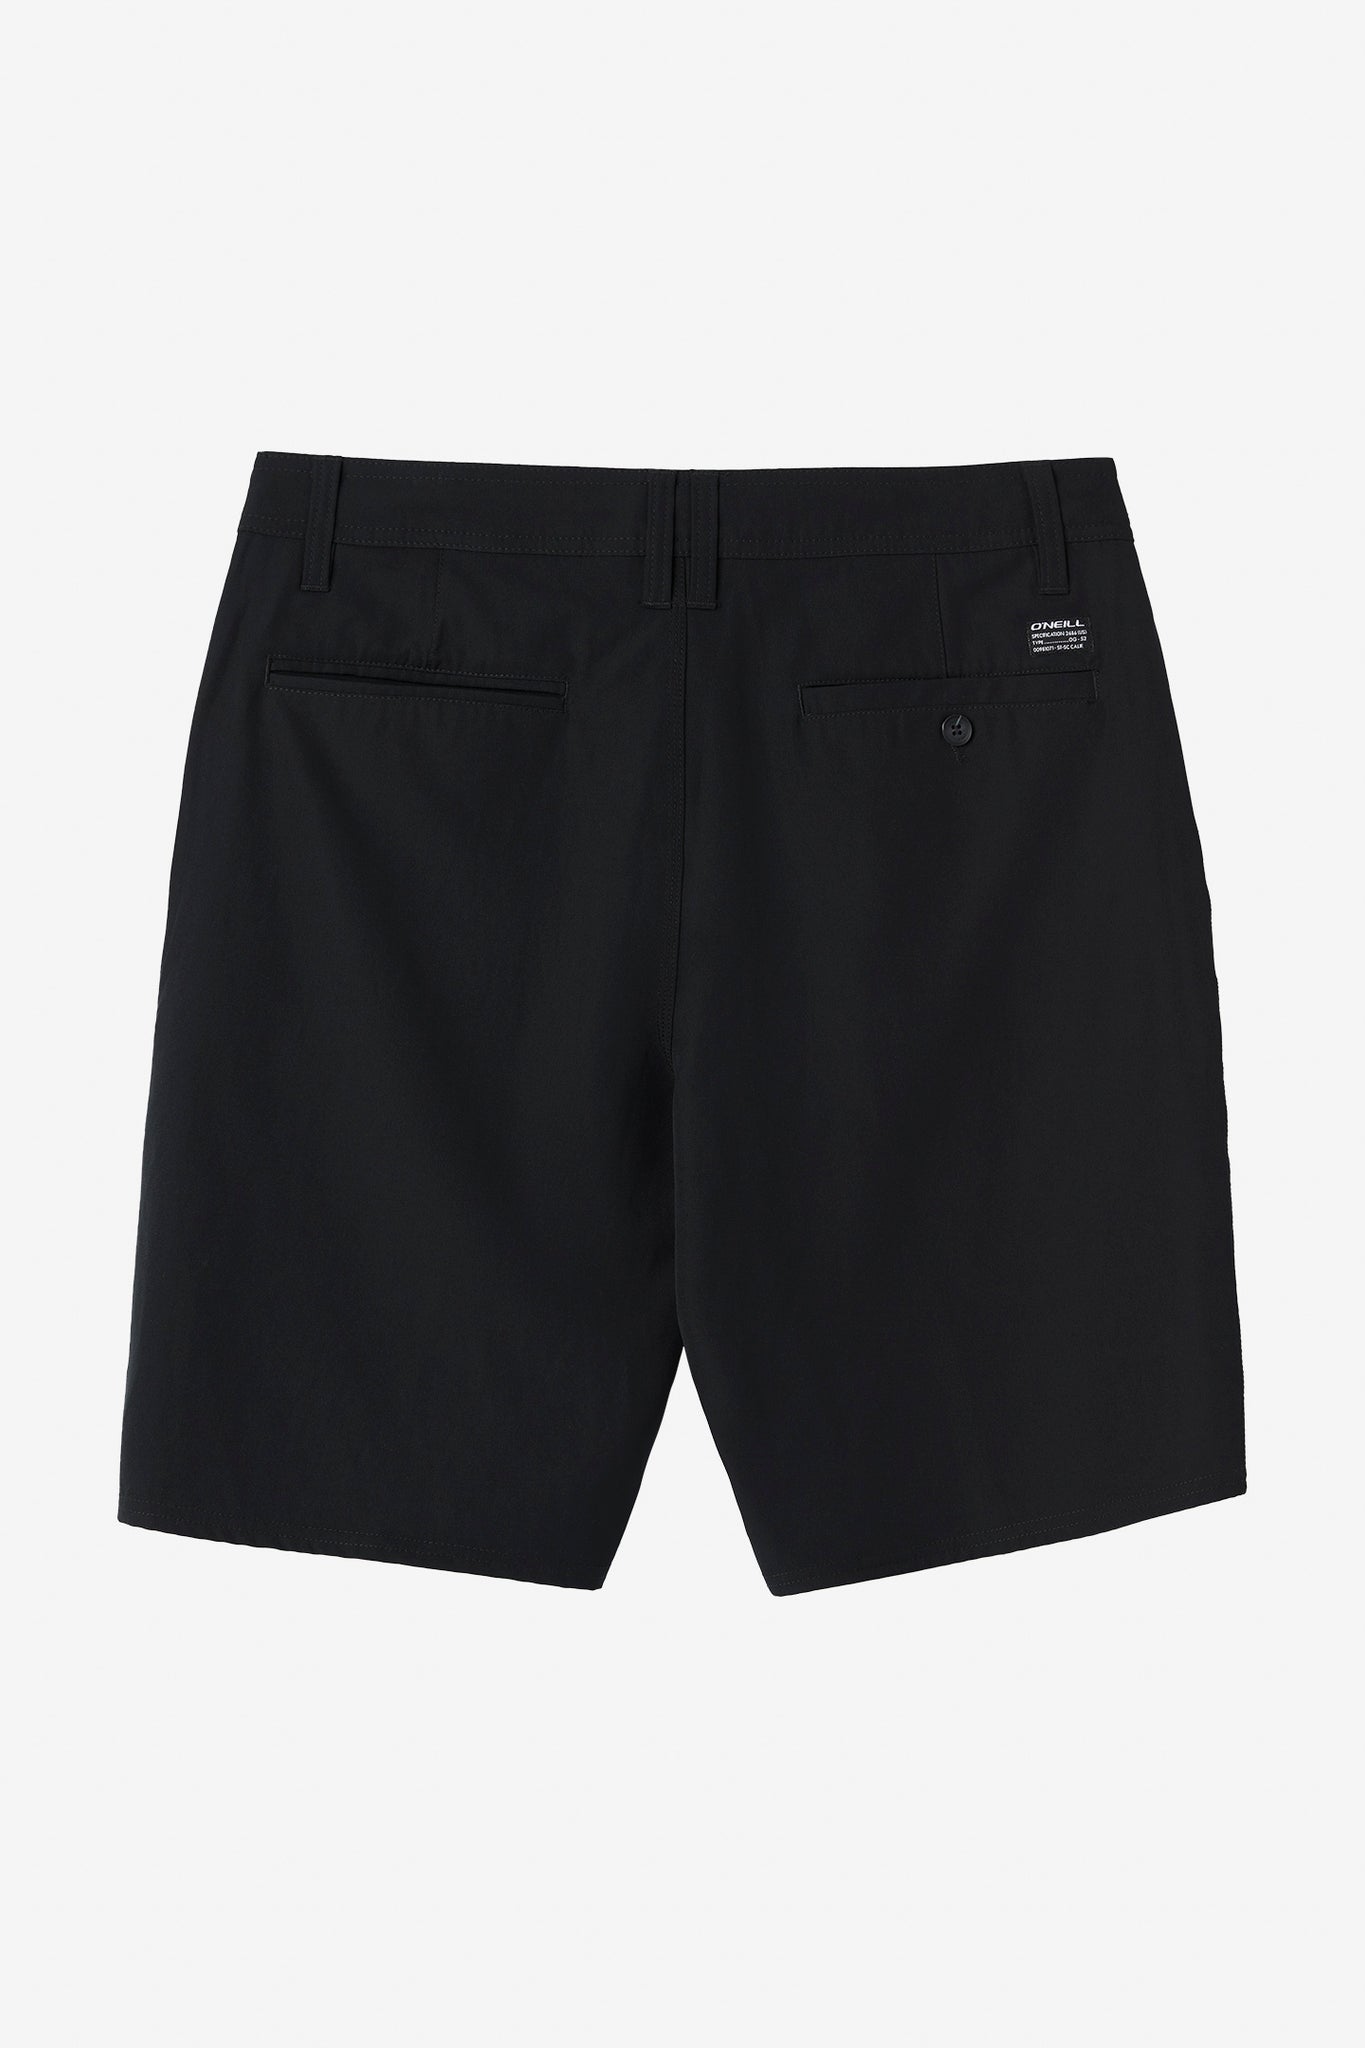 Loaded Hybrid Hybrid Shorts - Black | O'Neill